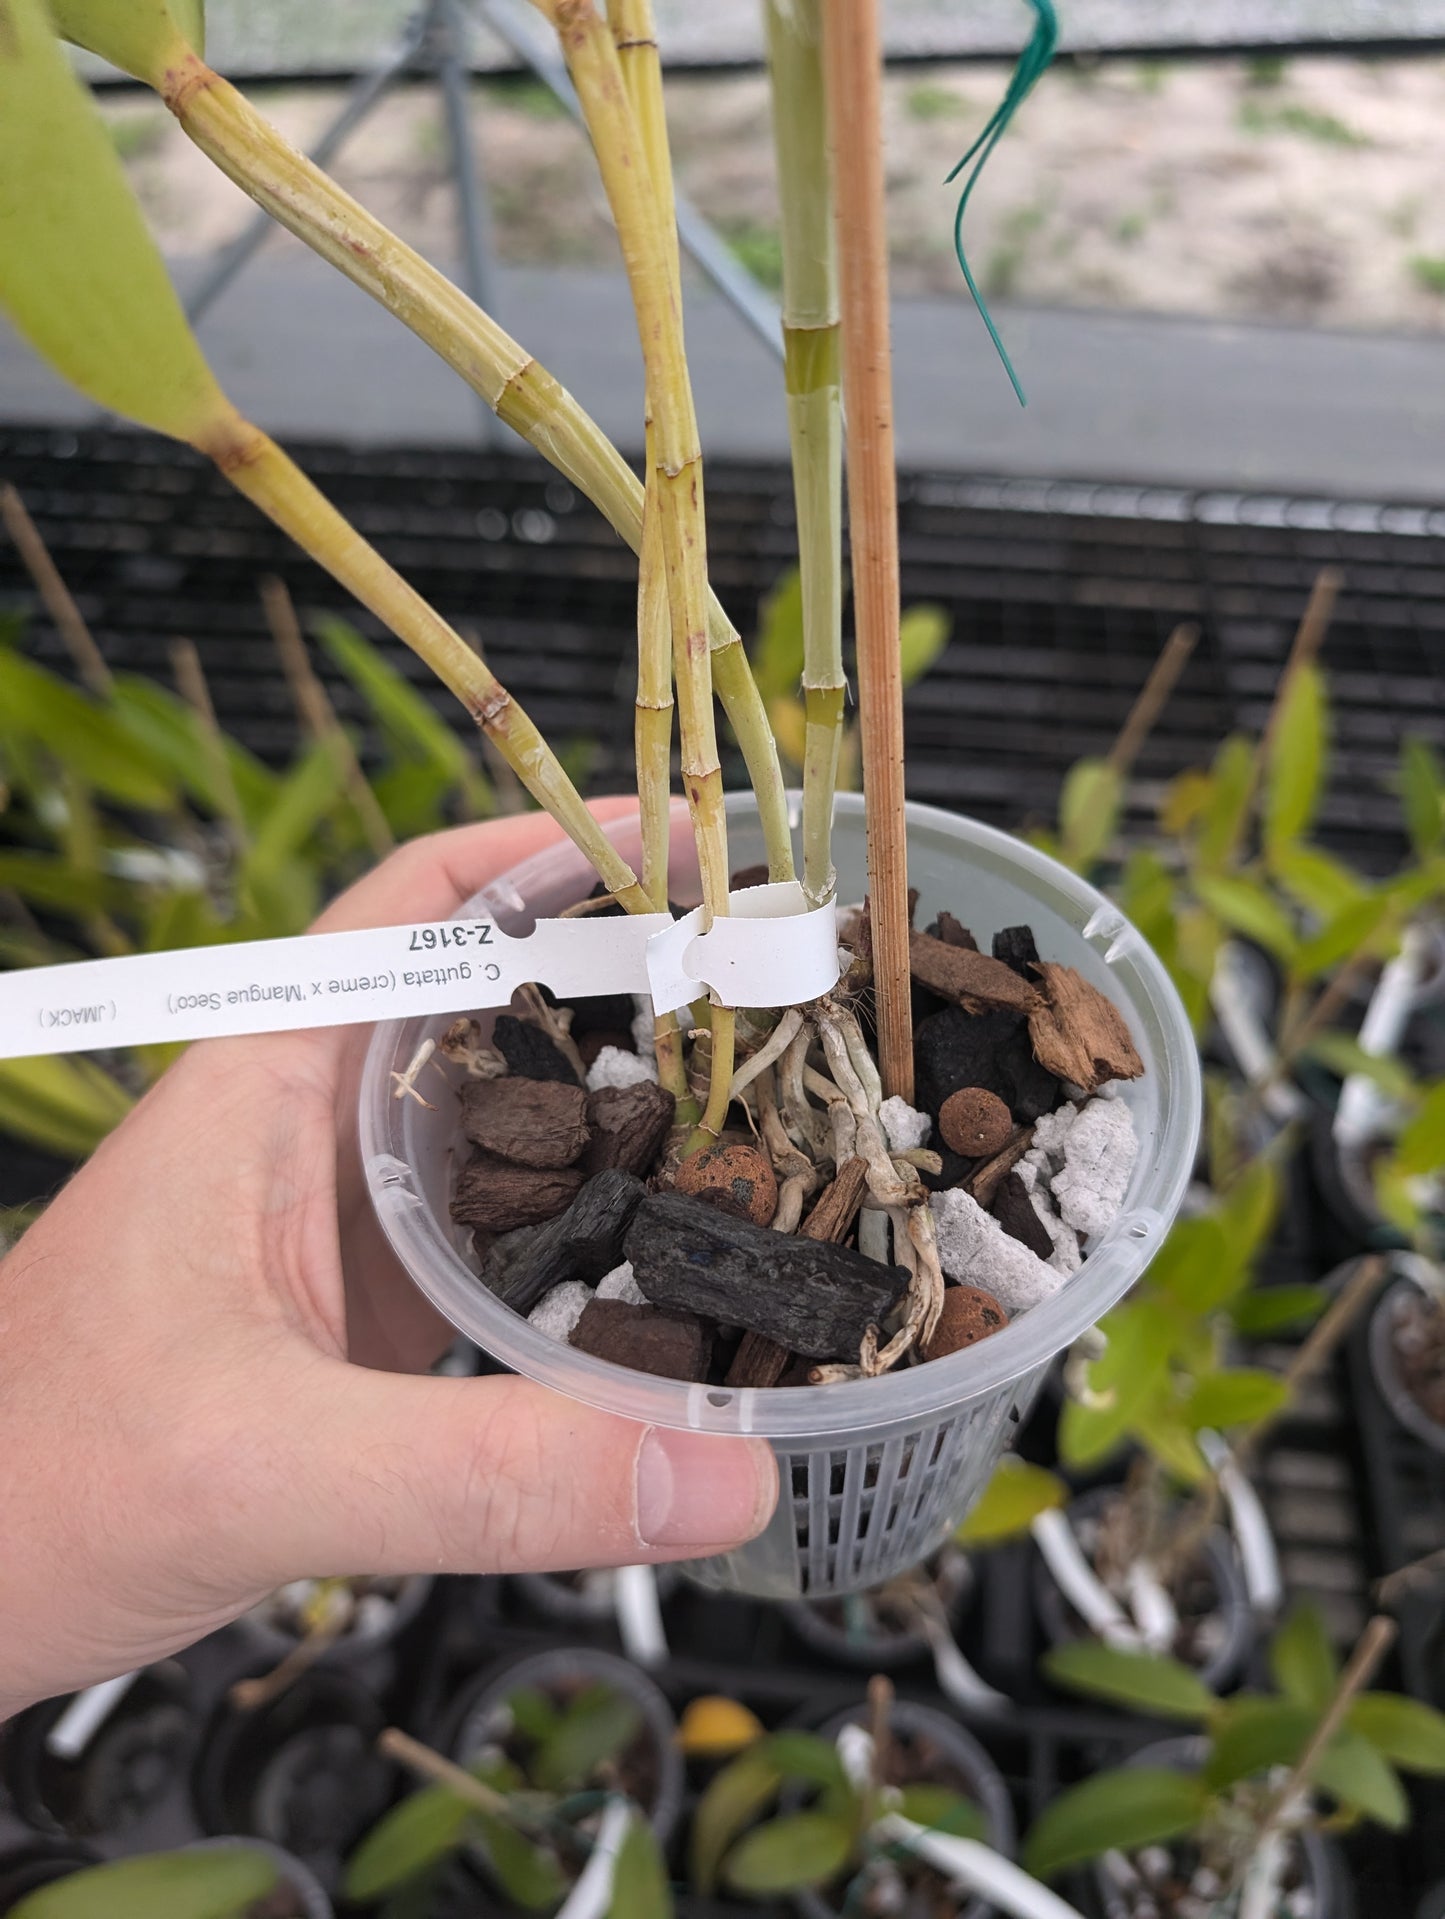 C. guttata creme x C. guttata 'Mangue Seco' | Seed grown cross | Species